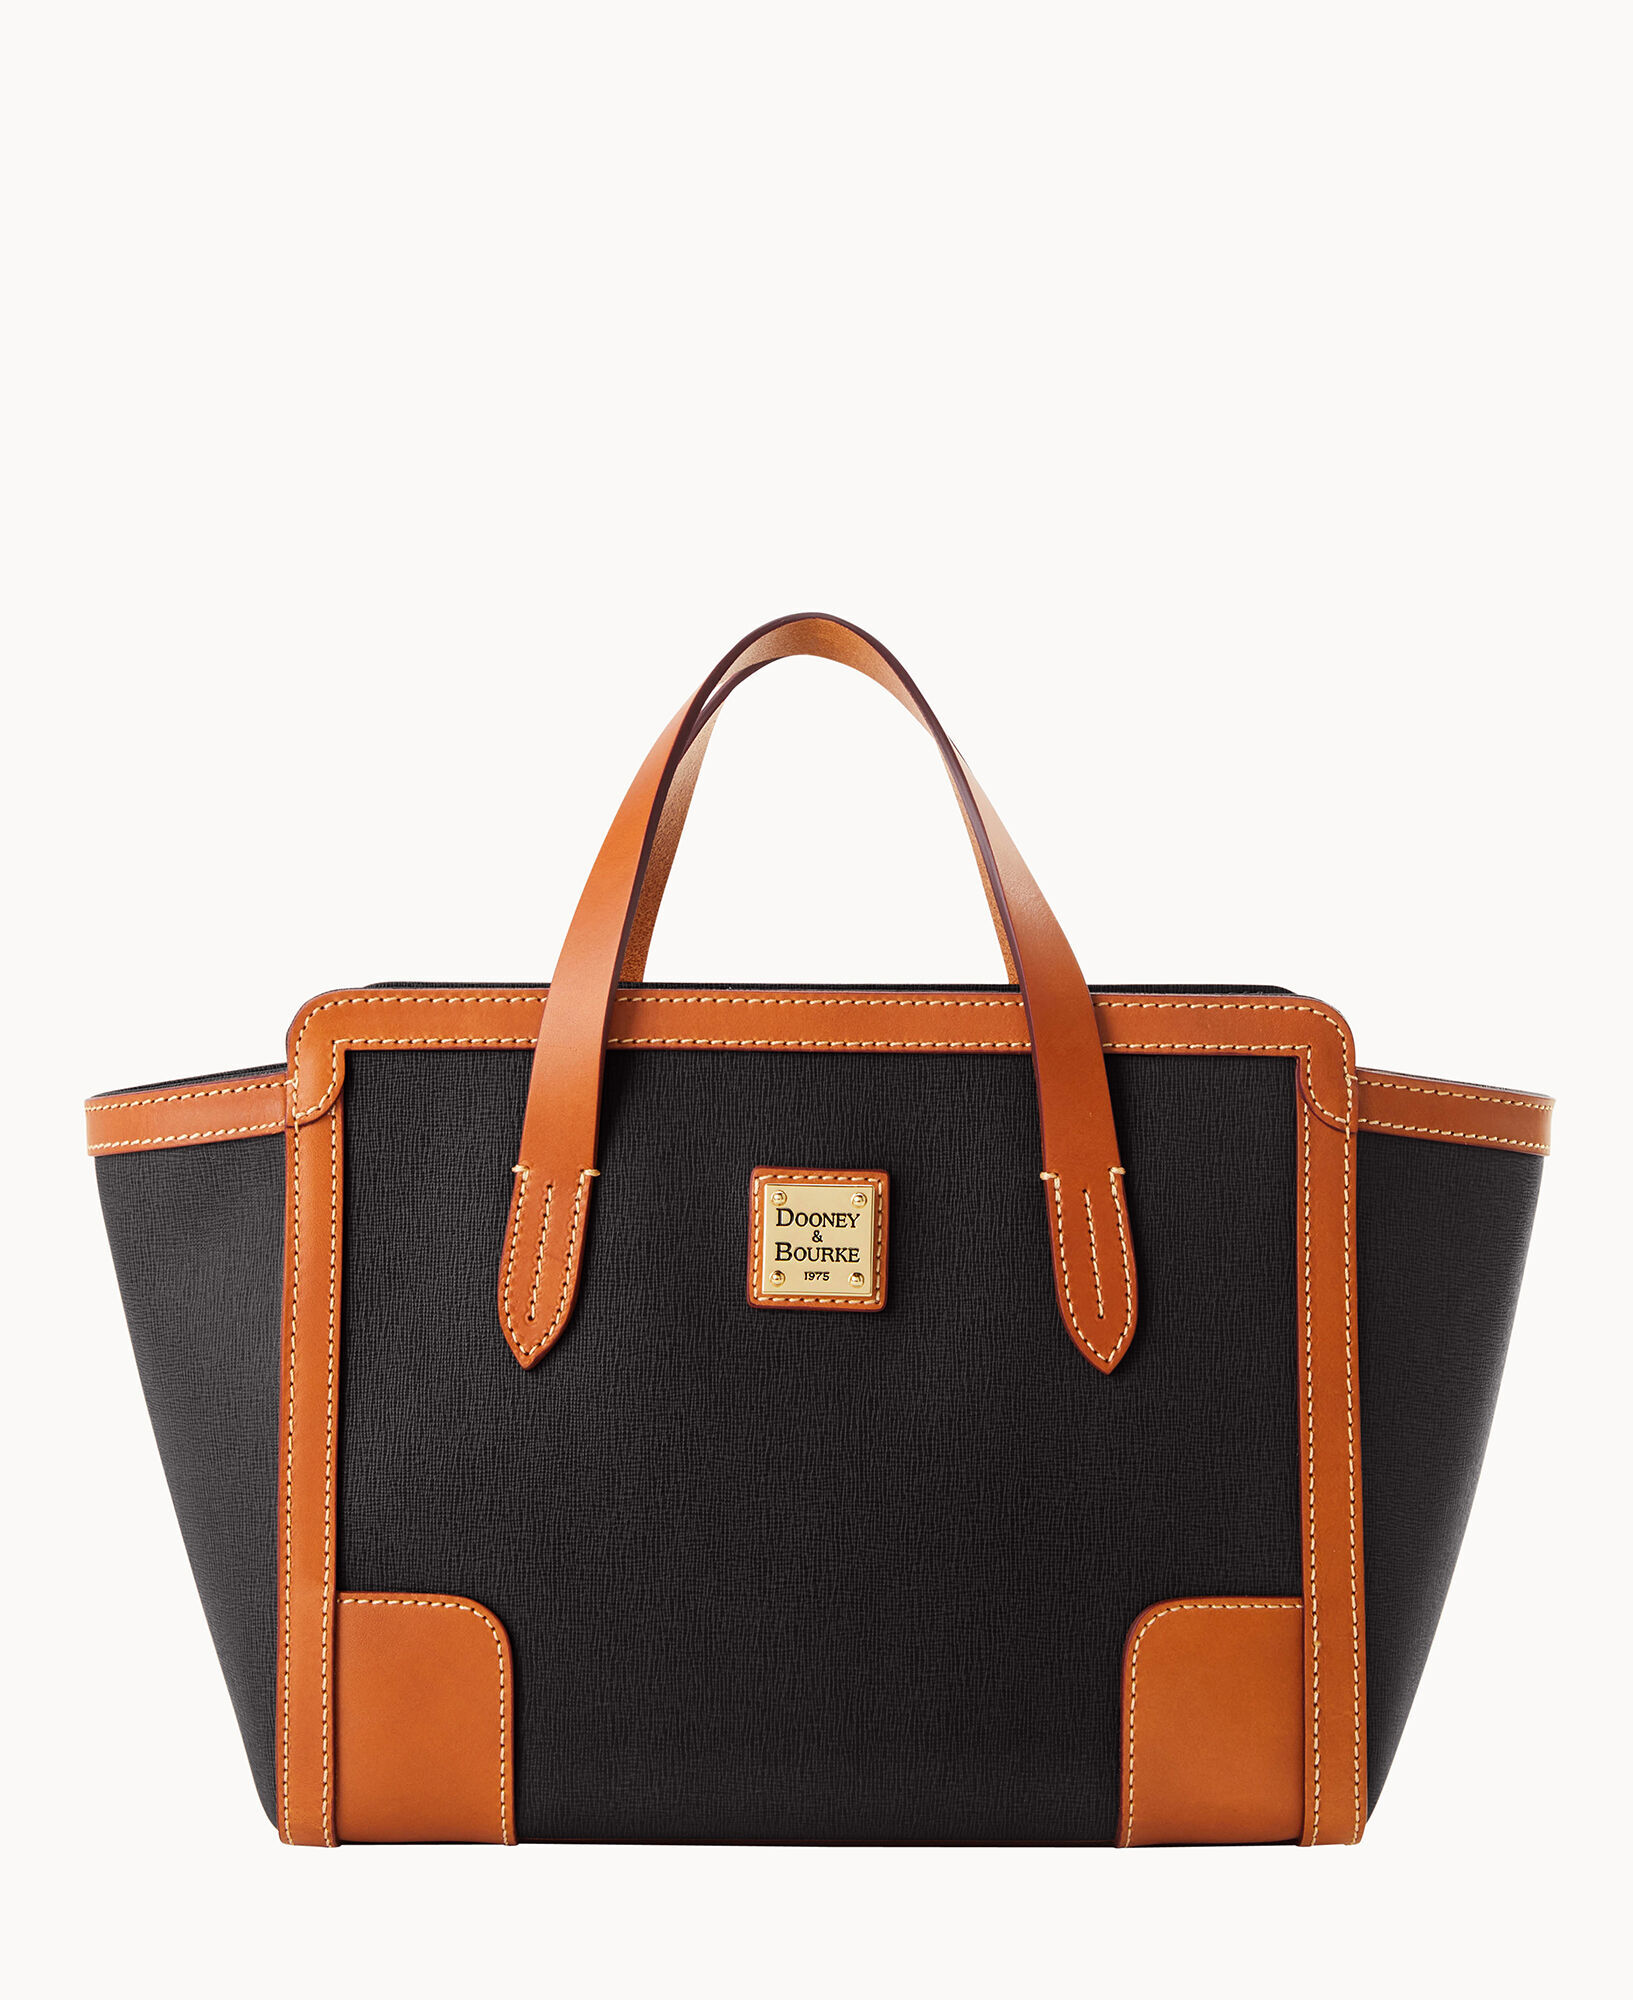 Dooney & Bourke Saffiano Leather Handbags